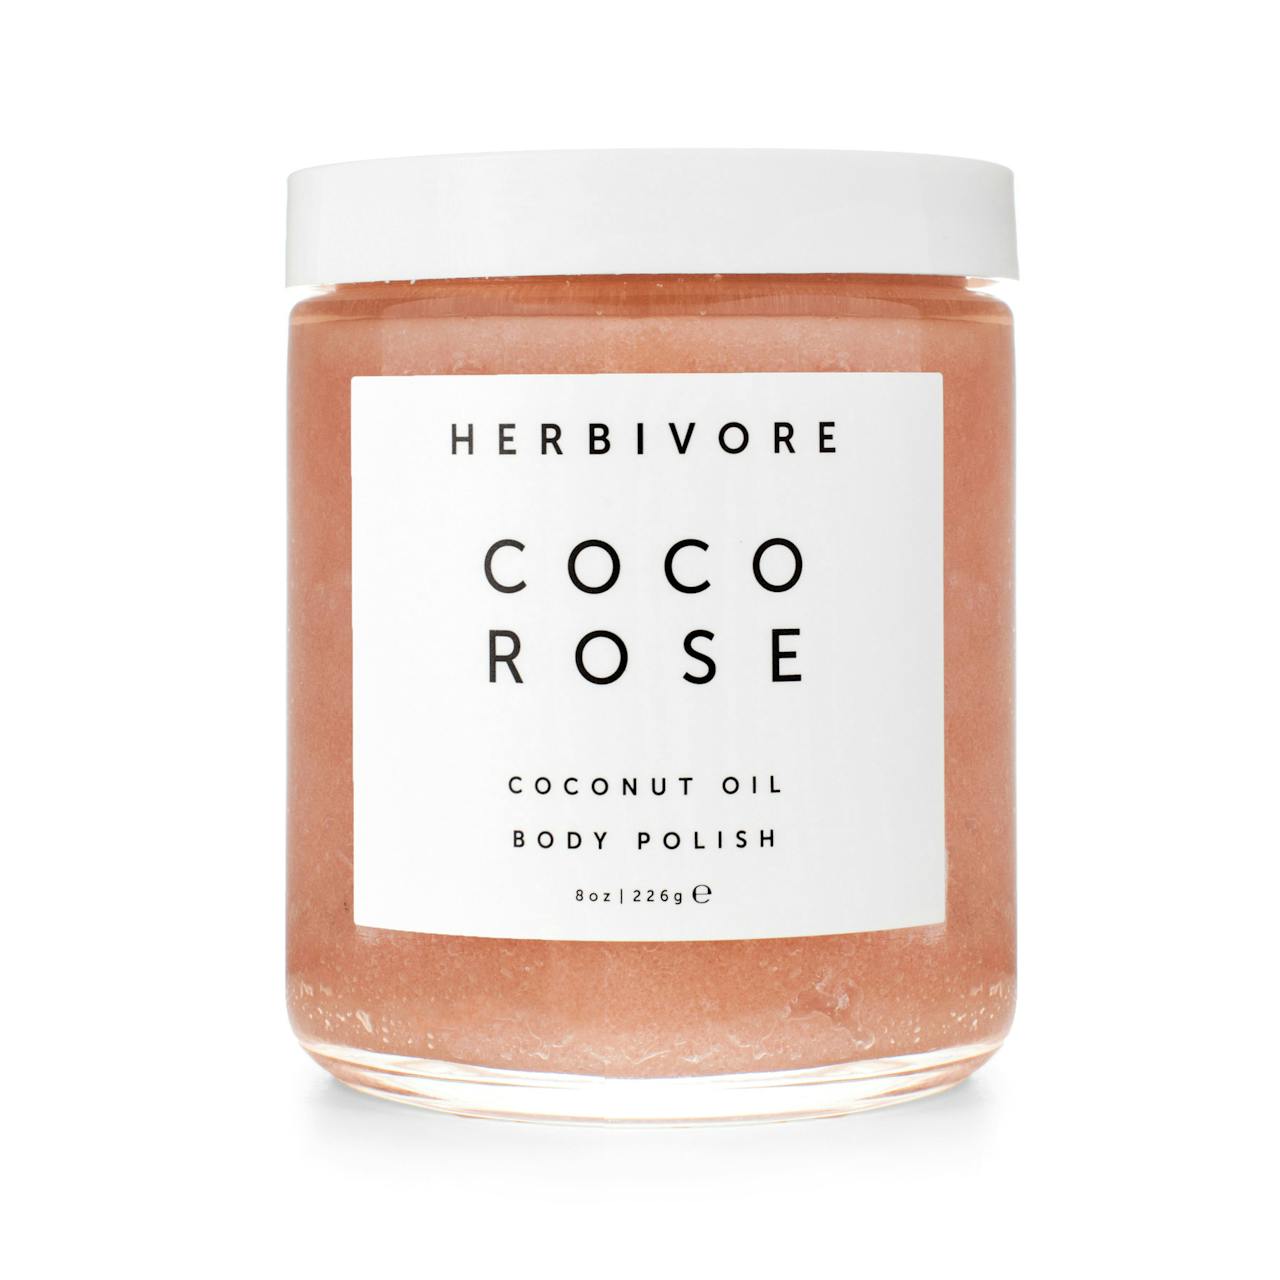 Herbivore Coco Rose Body Polish (8oz)